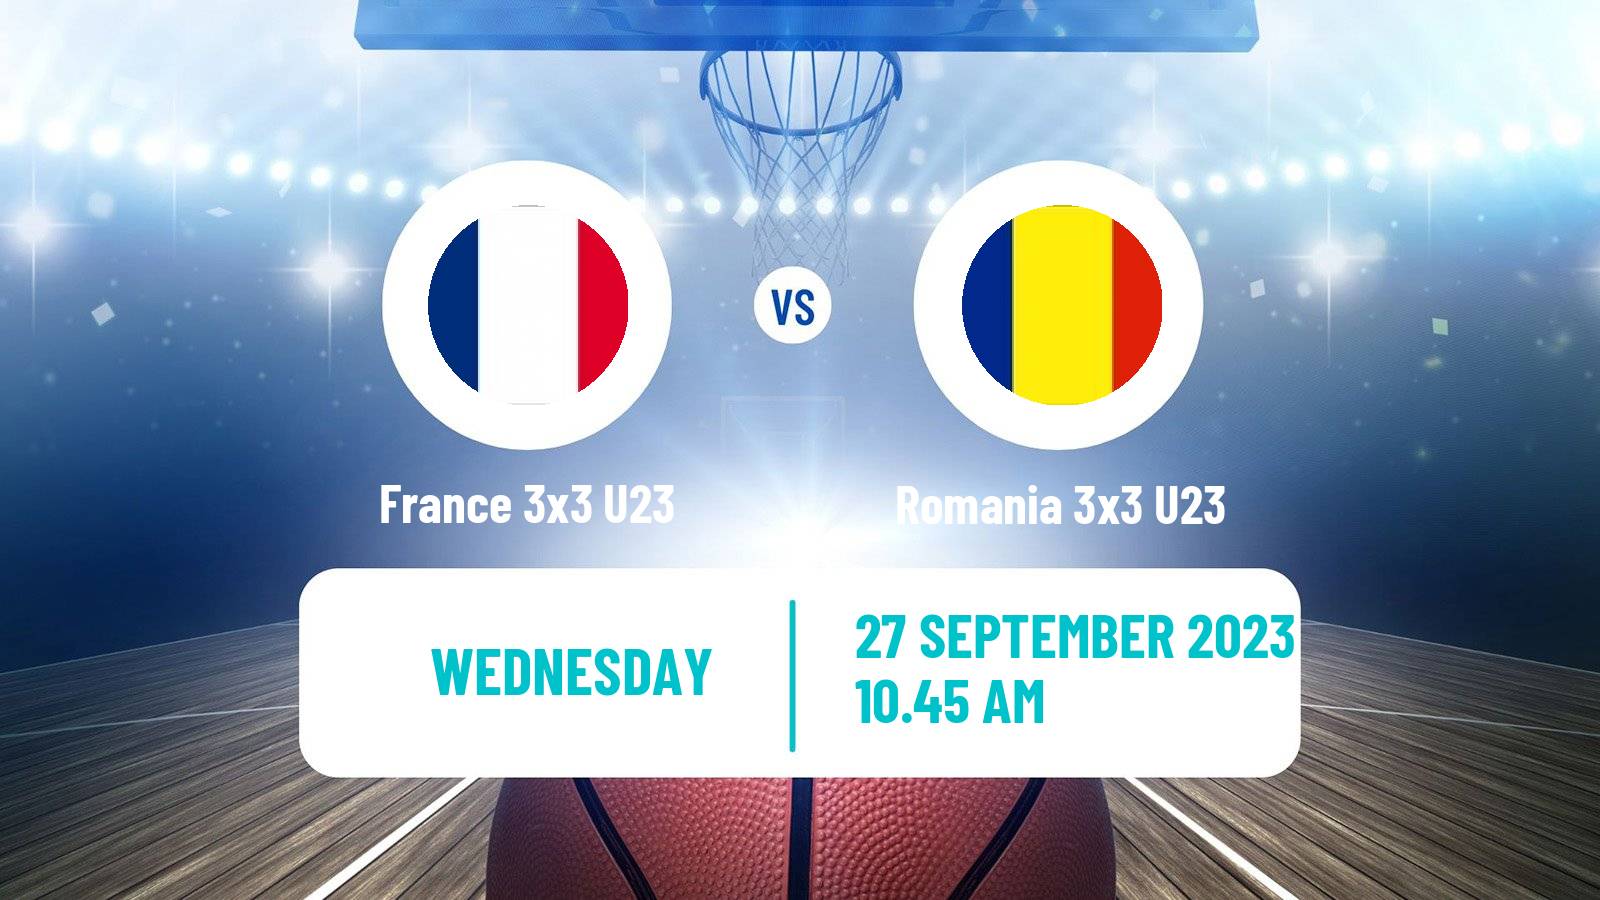 Basketball World Cup Basketball 3x3 U23 France 3x3 U23 - Romania 3x3 U23